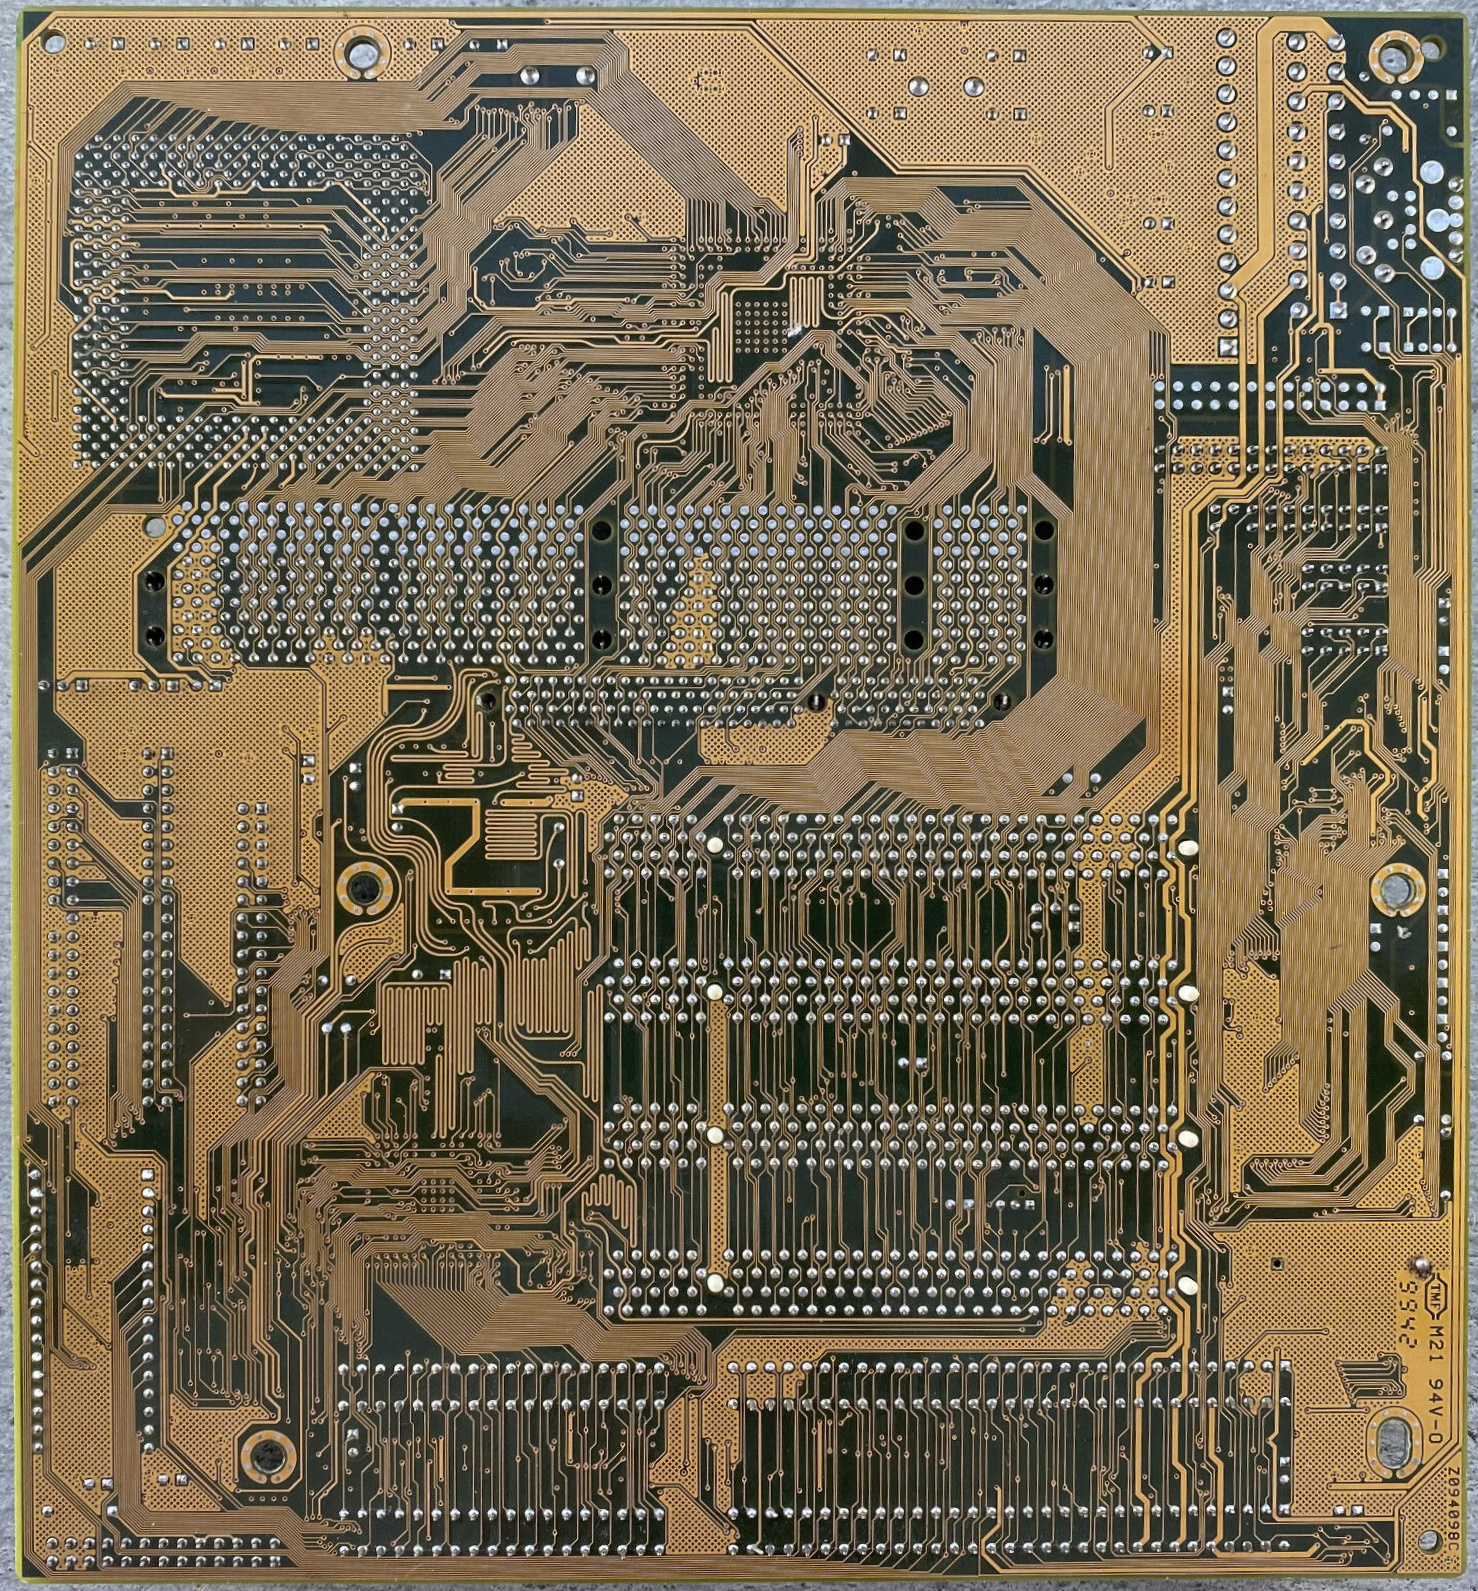 Zida ZX98-CT - The Retro Web